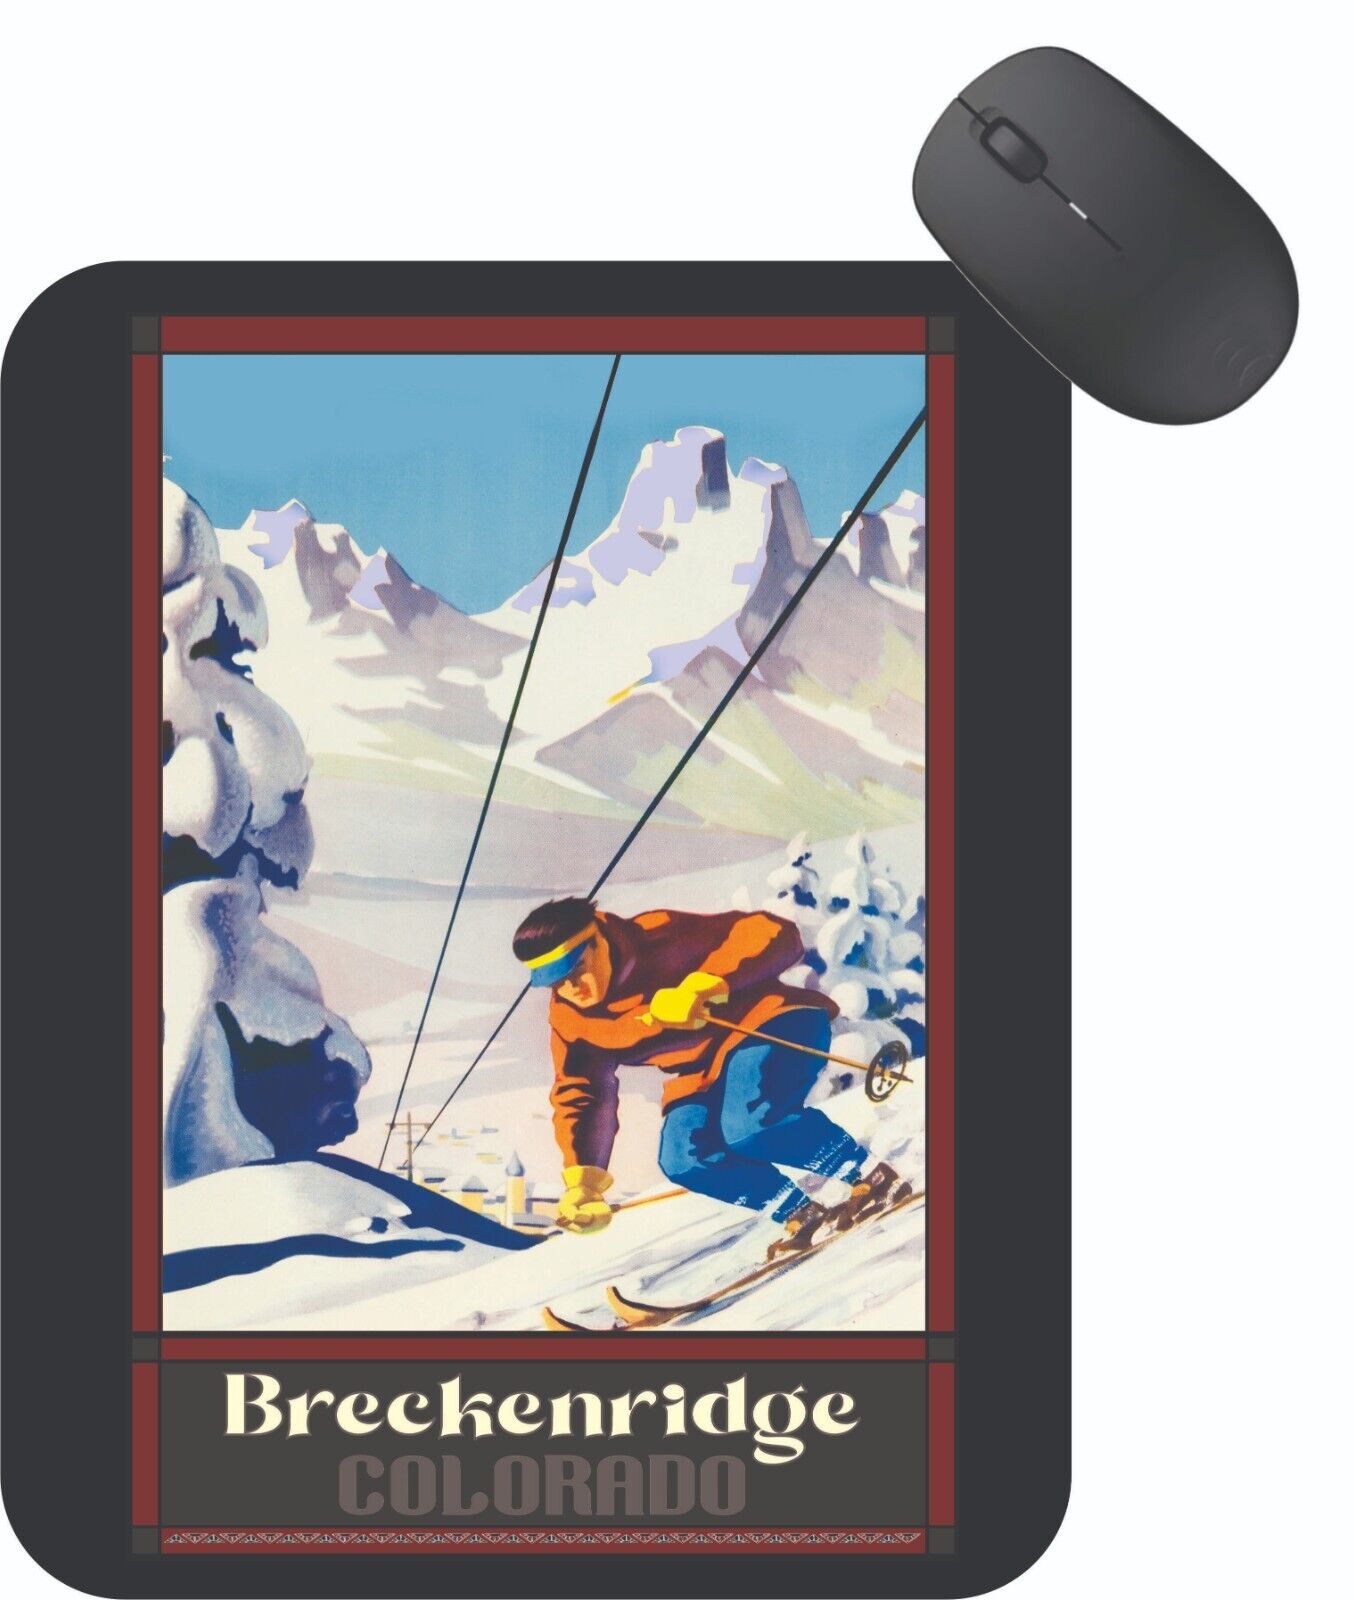 Ski Breckenridge Colorado Mouse Pad Skiing Travel Poster Art & Downhill Slopes